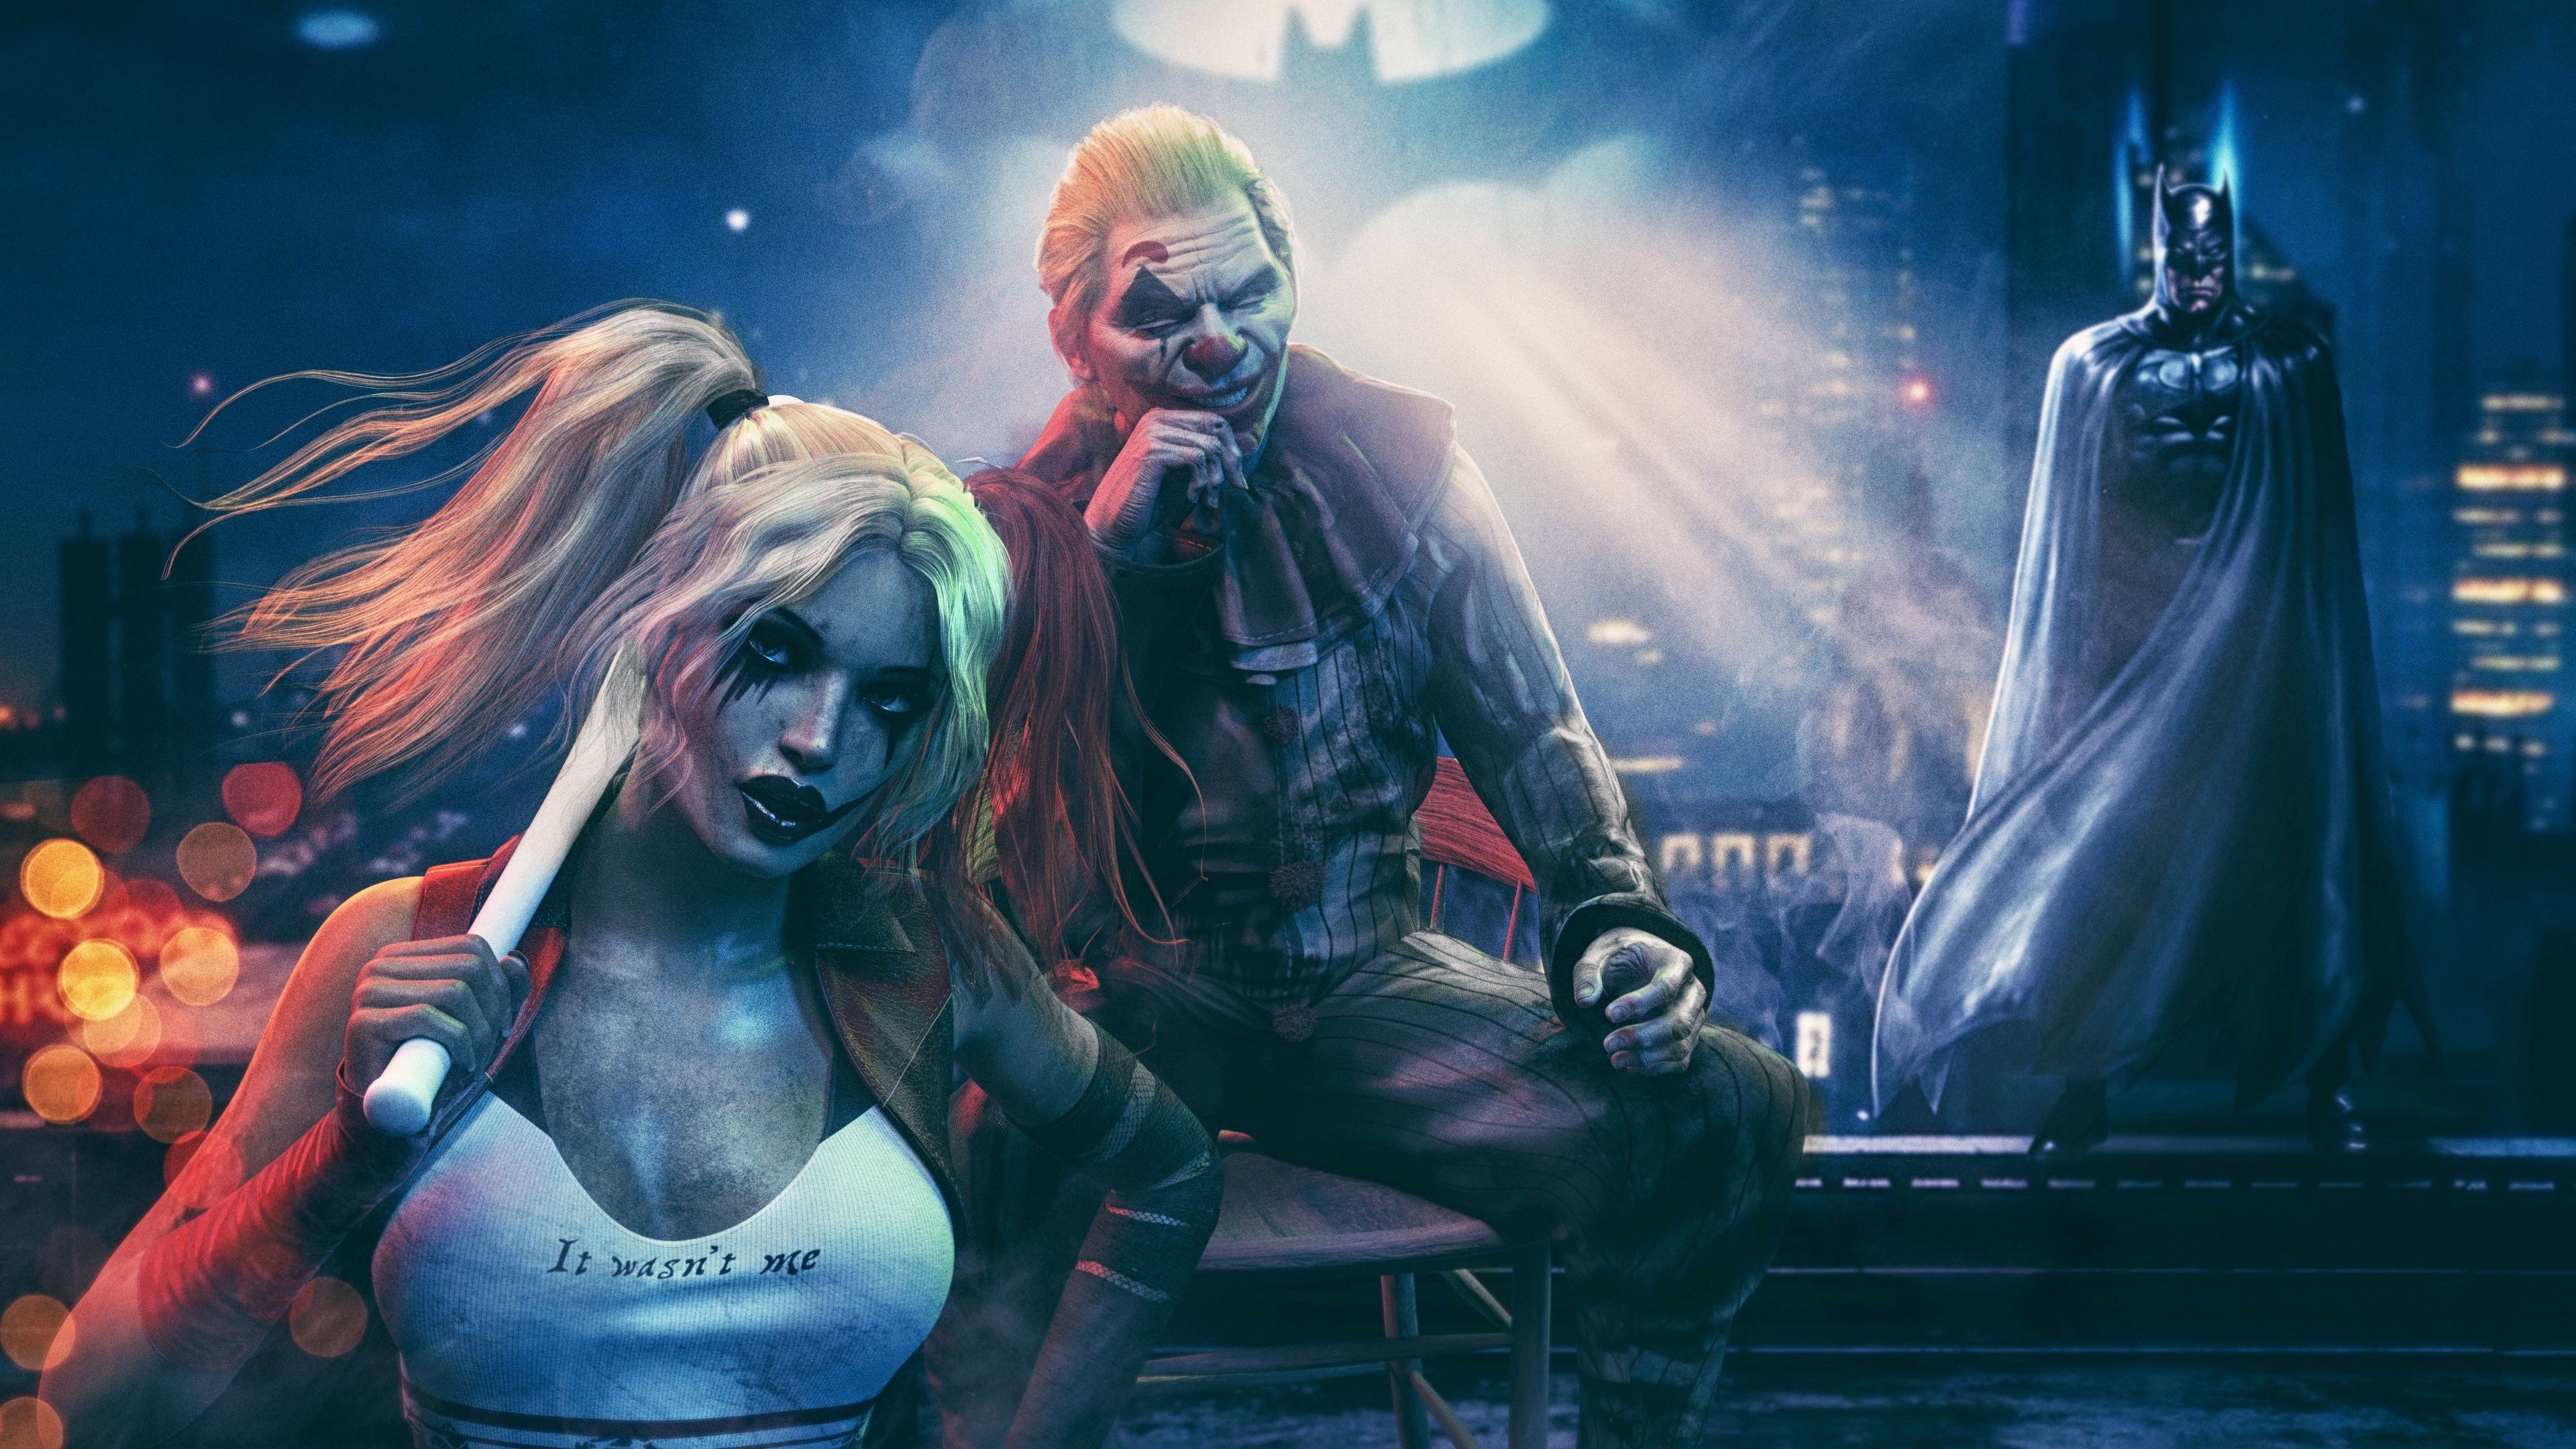 Joker With Harley Quinn And Batman, HD Superheroes, 4k Wallpapers, Image, B...